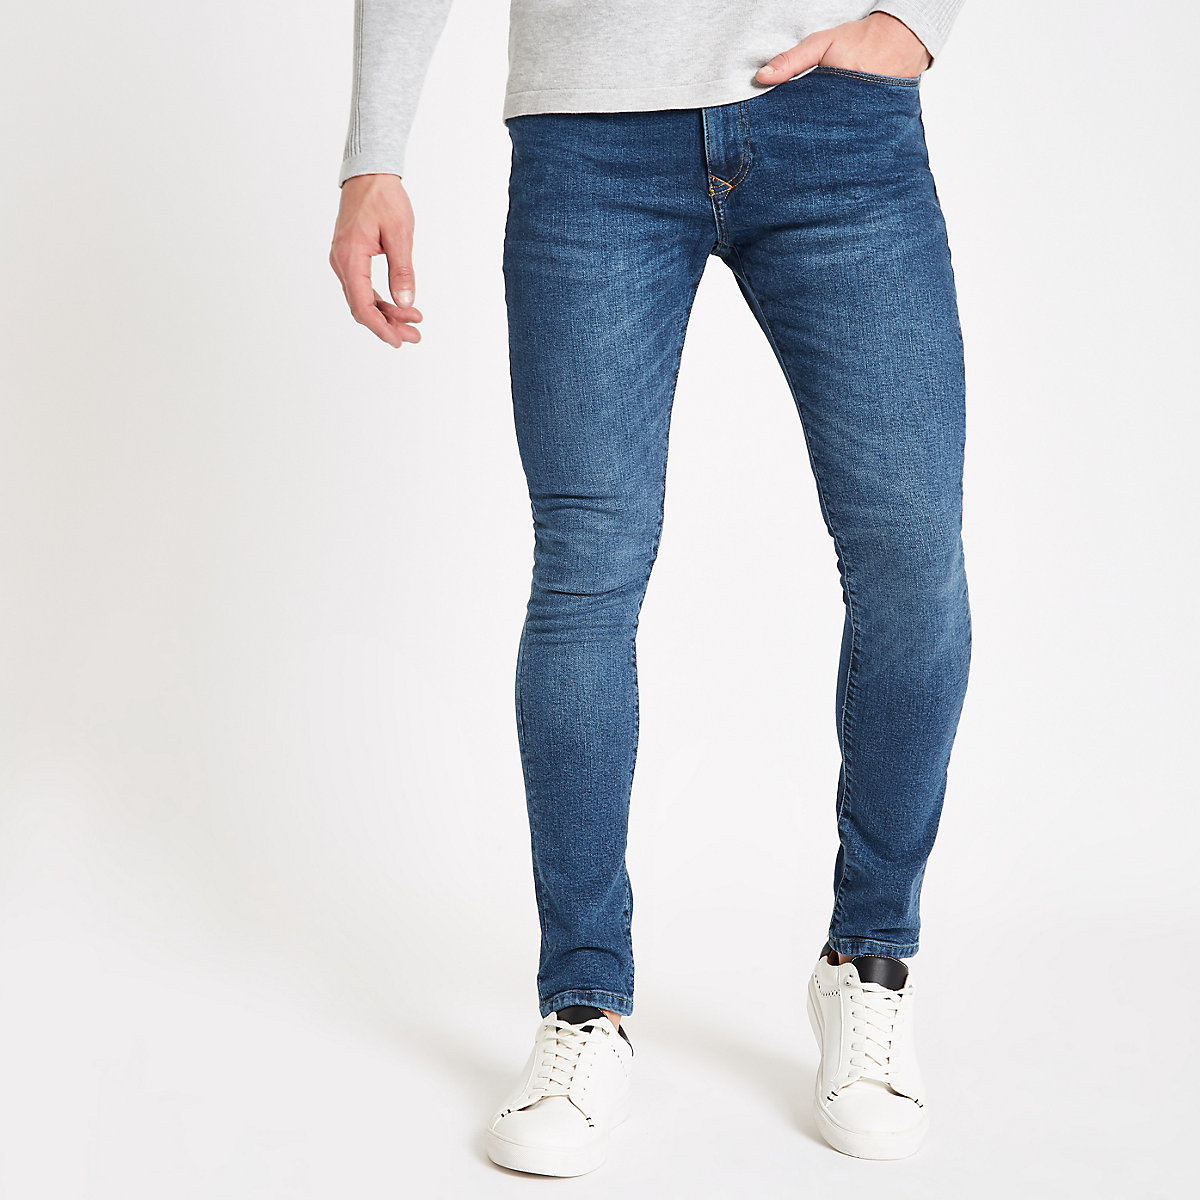 very skinny jeans mens